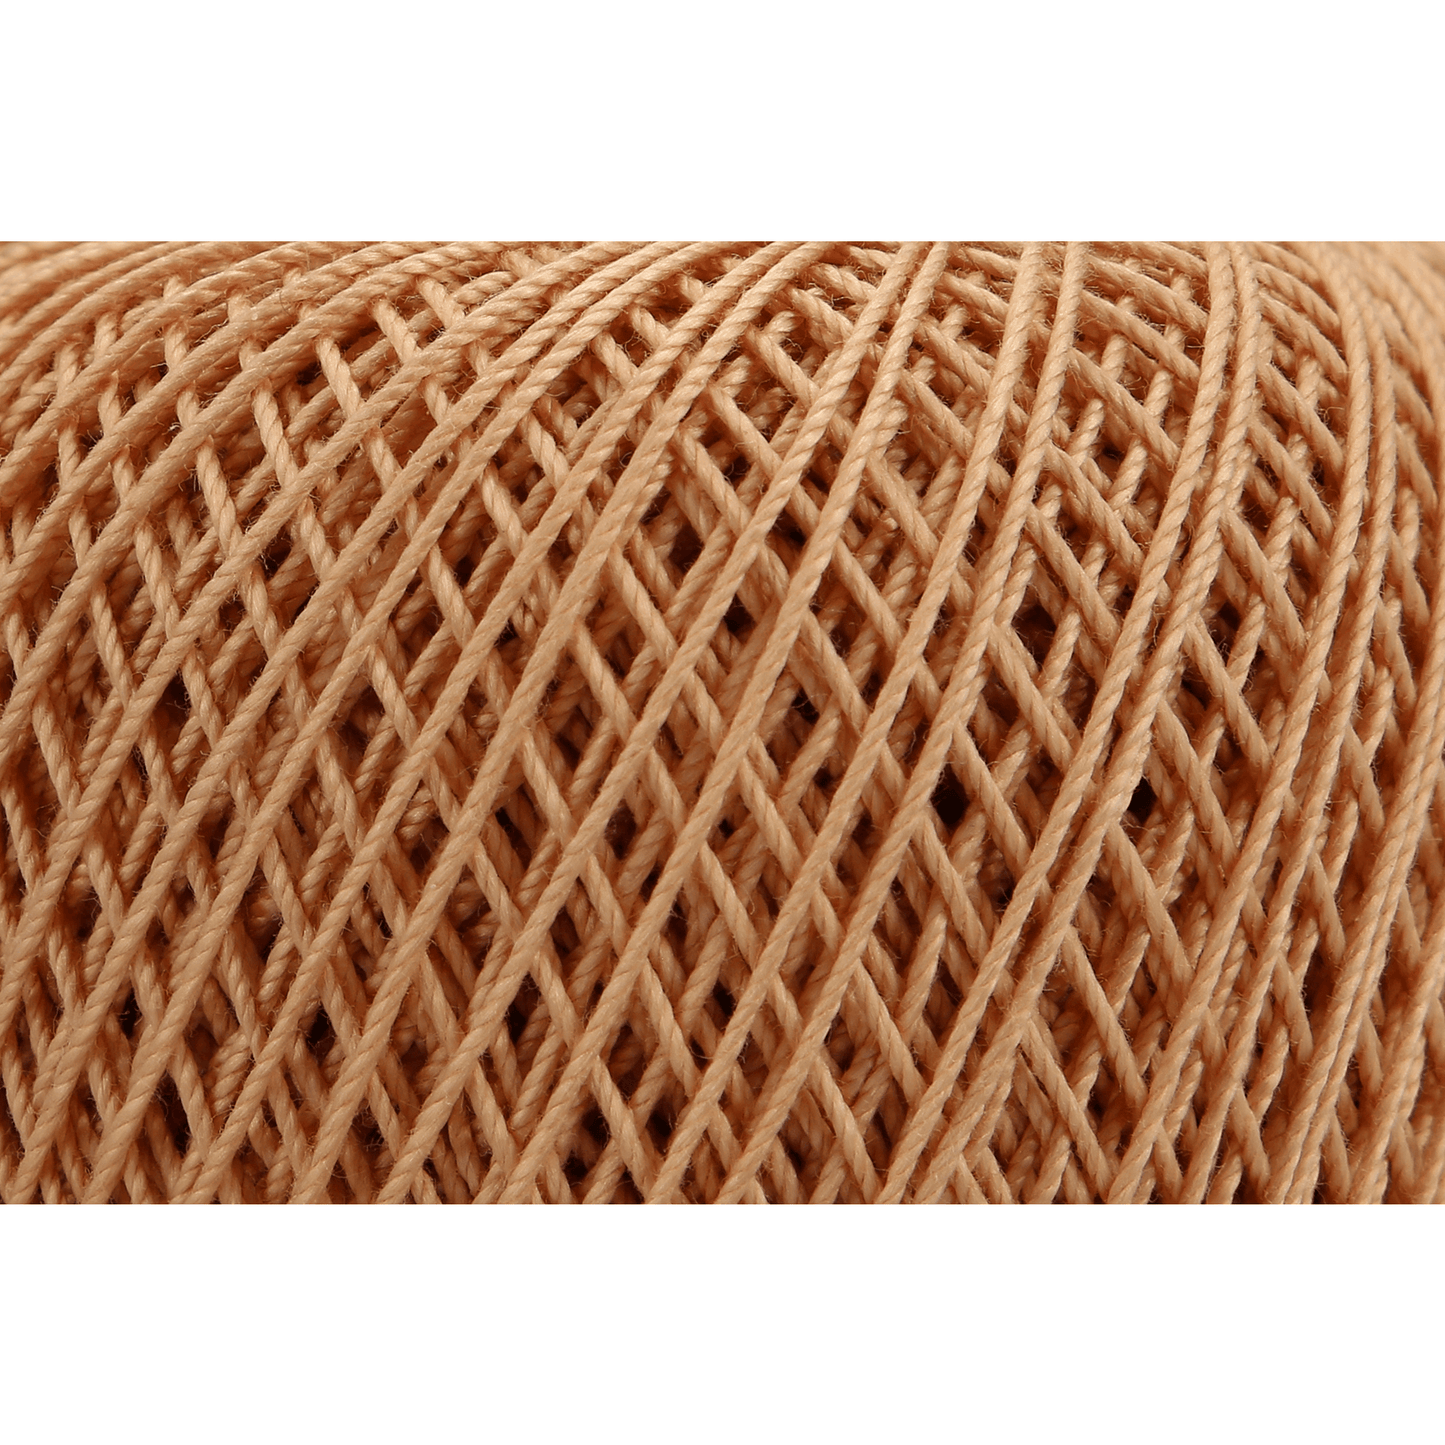 Freccia 6 crochet yarn, 50g, color 367 hazelnut